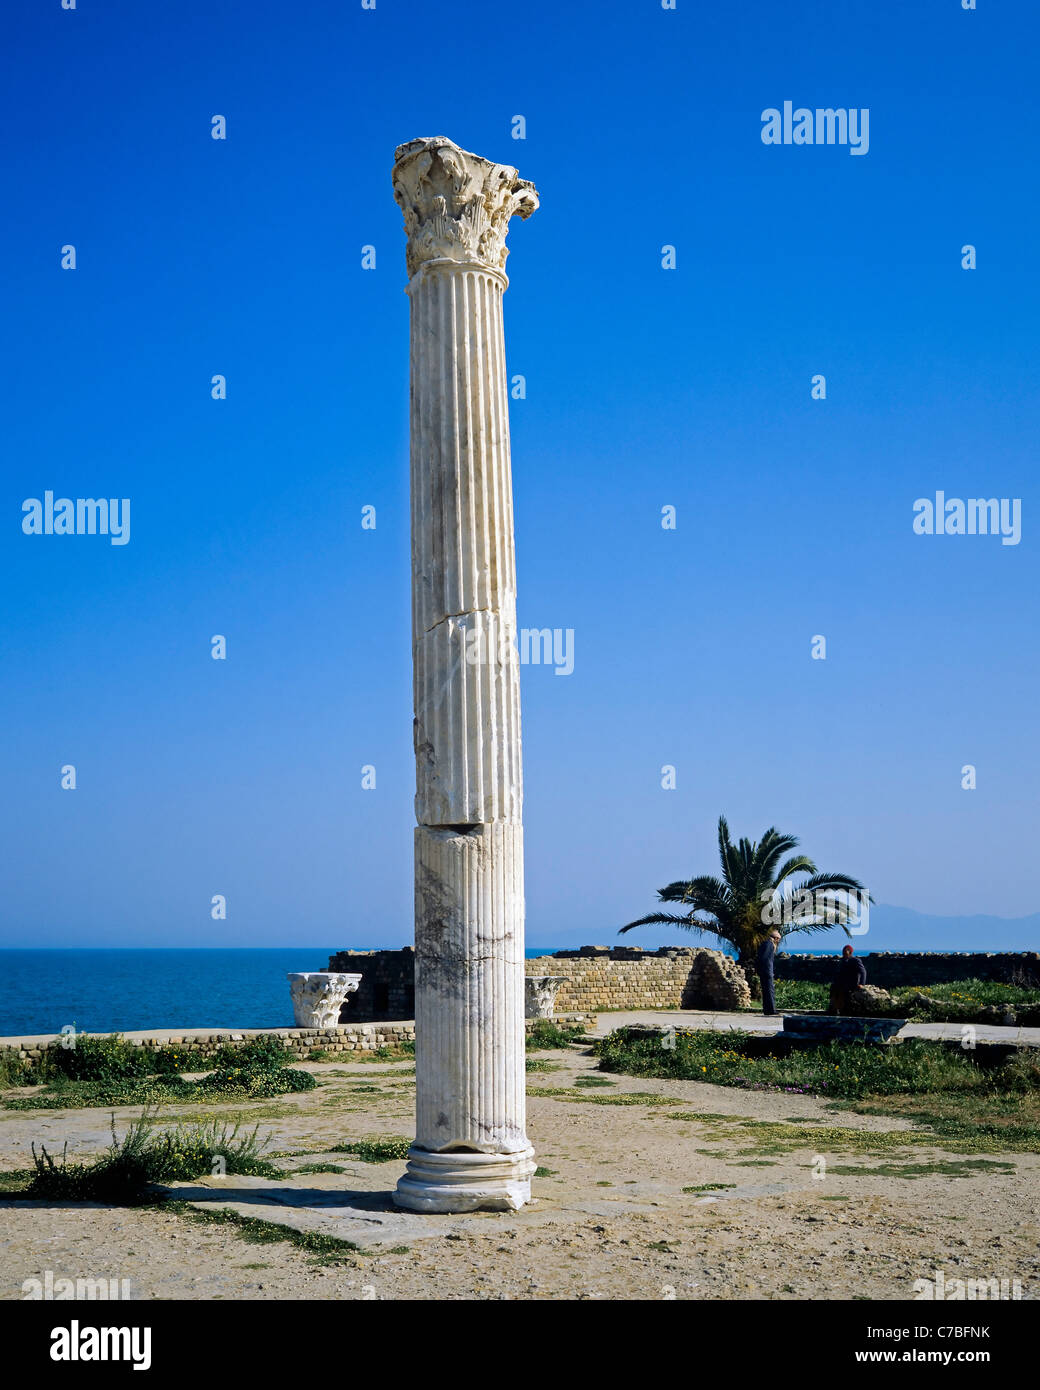 Archaeological site of Carthage, Tunisia, remains of Antonine Roman thermal baths, column with Corinthian capital, Mediterranean seashore, Stock Photo